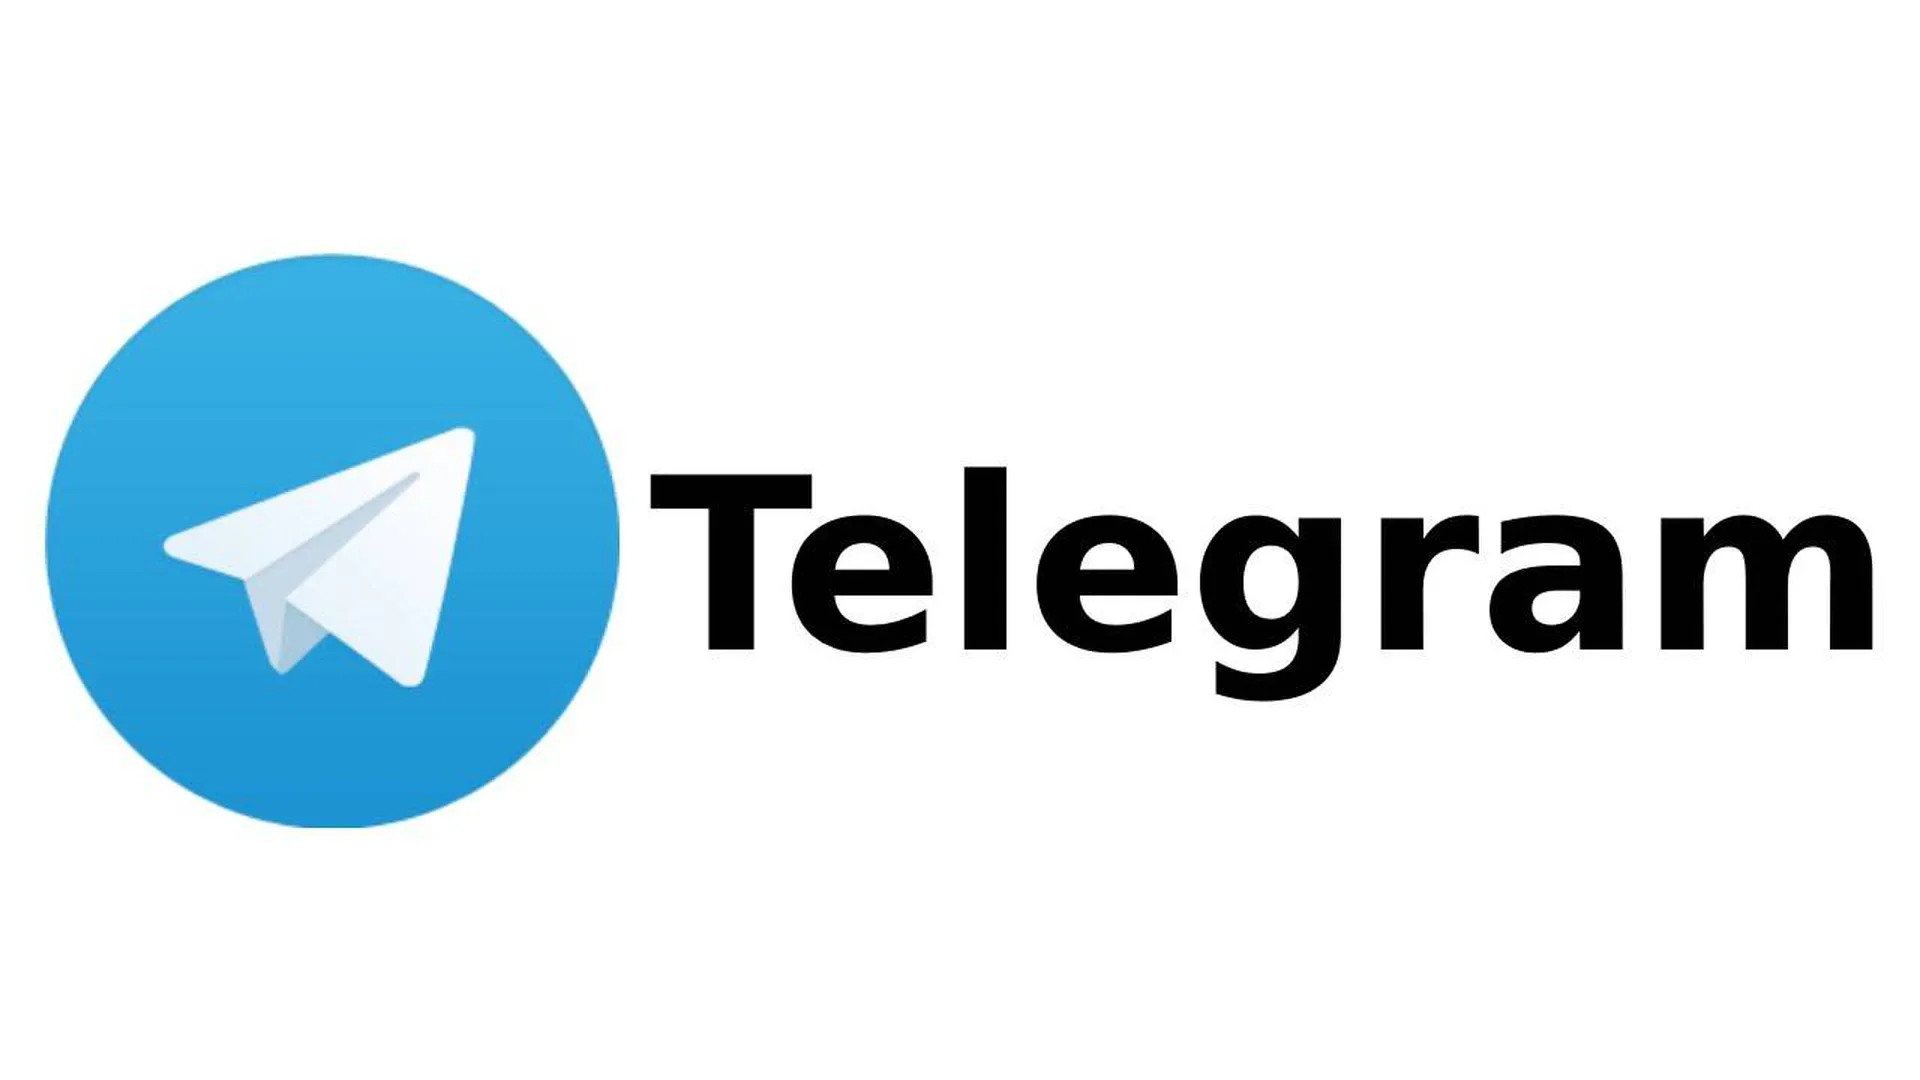 Telegram pictures. Телеграмм. Телега логотип. Значе телеграмм. Логотип Telegram.